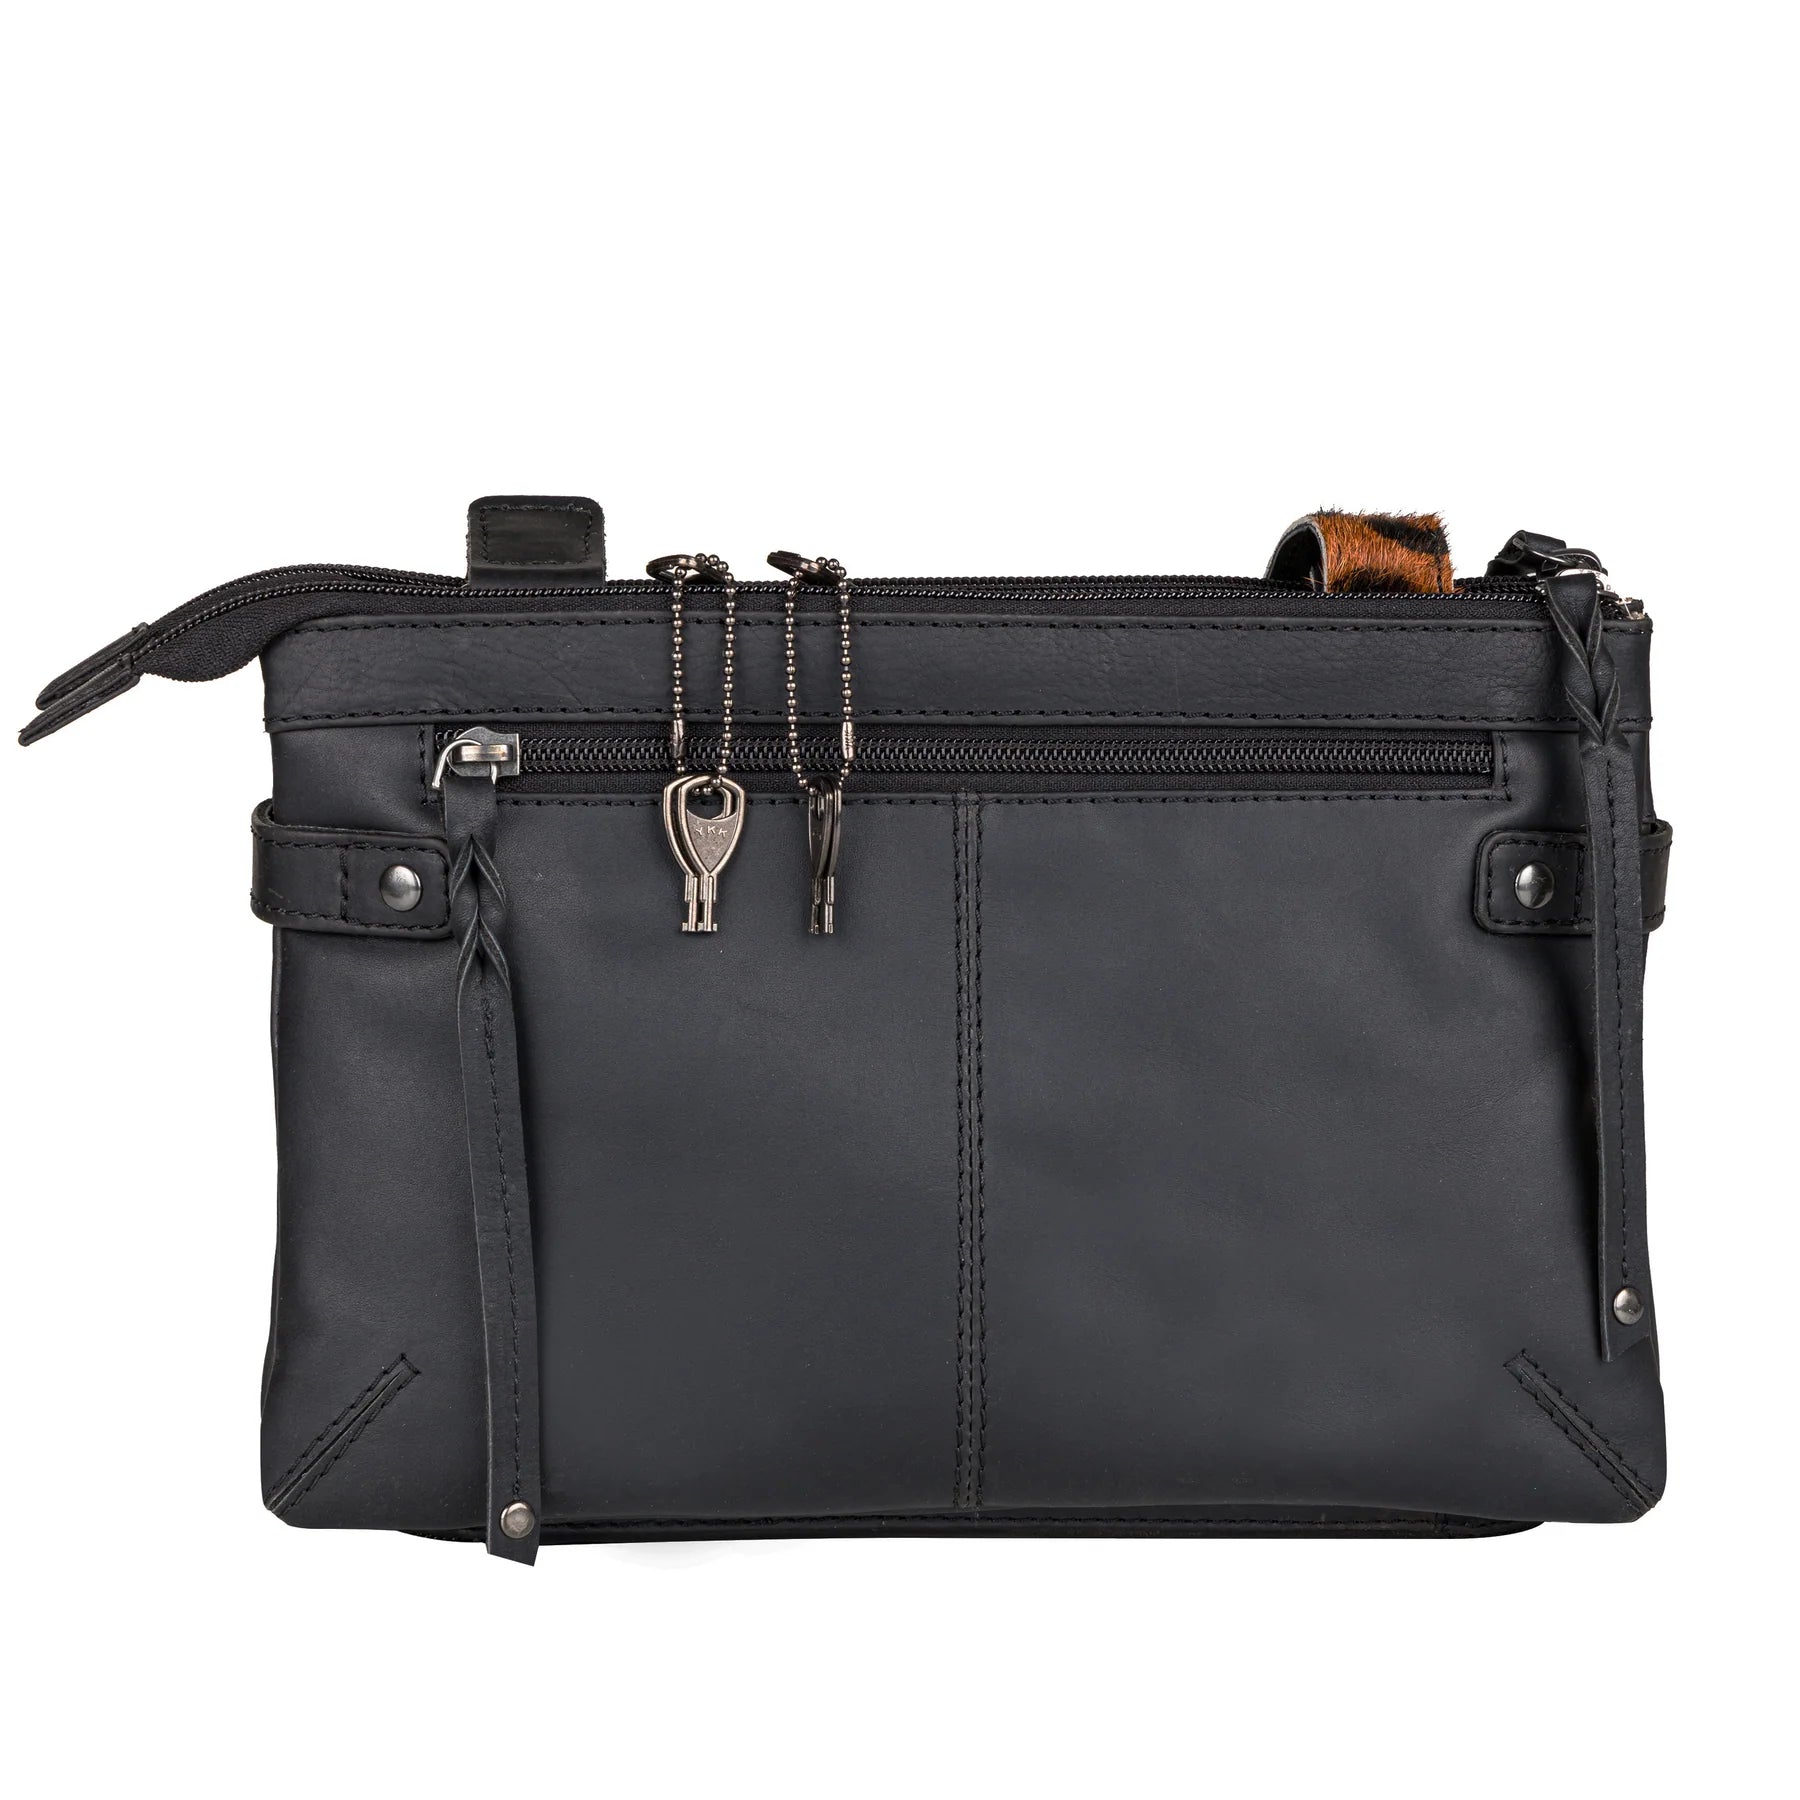 Grey Italian Leather Foldover Crossbody Bag Made in USA